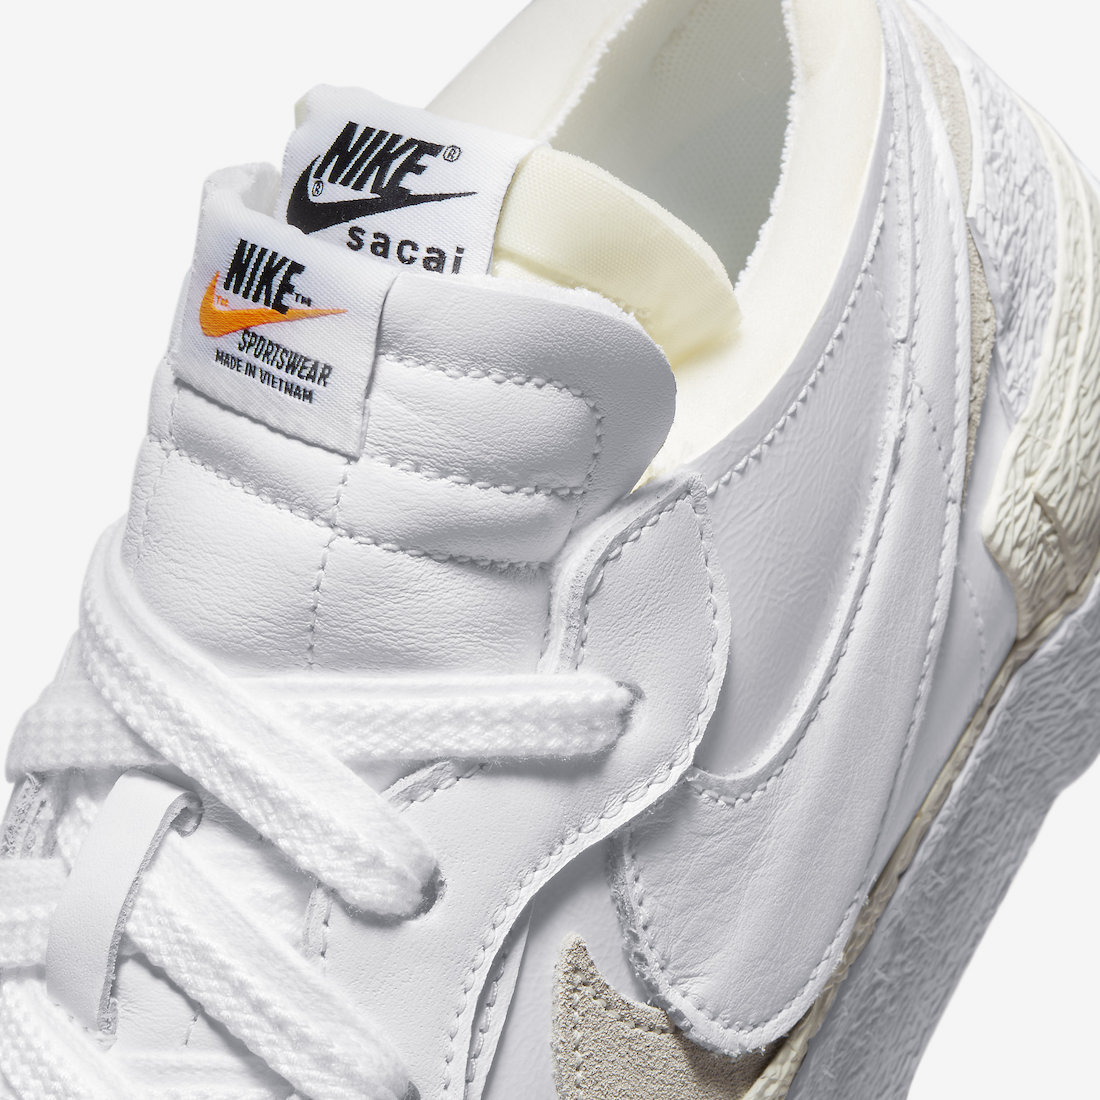 Sacai Nike Blazer Low White Patent DM6443-100 Release Date